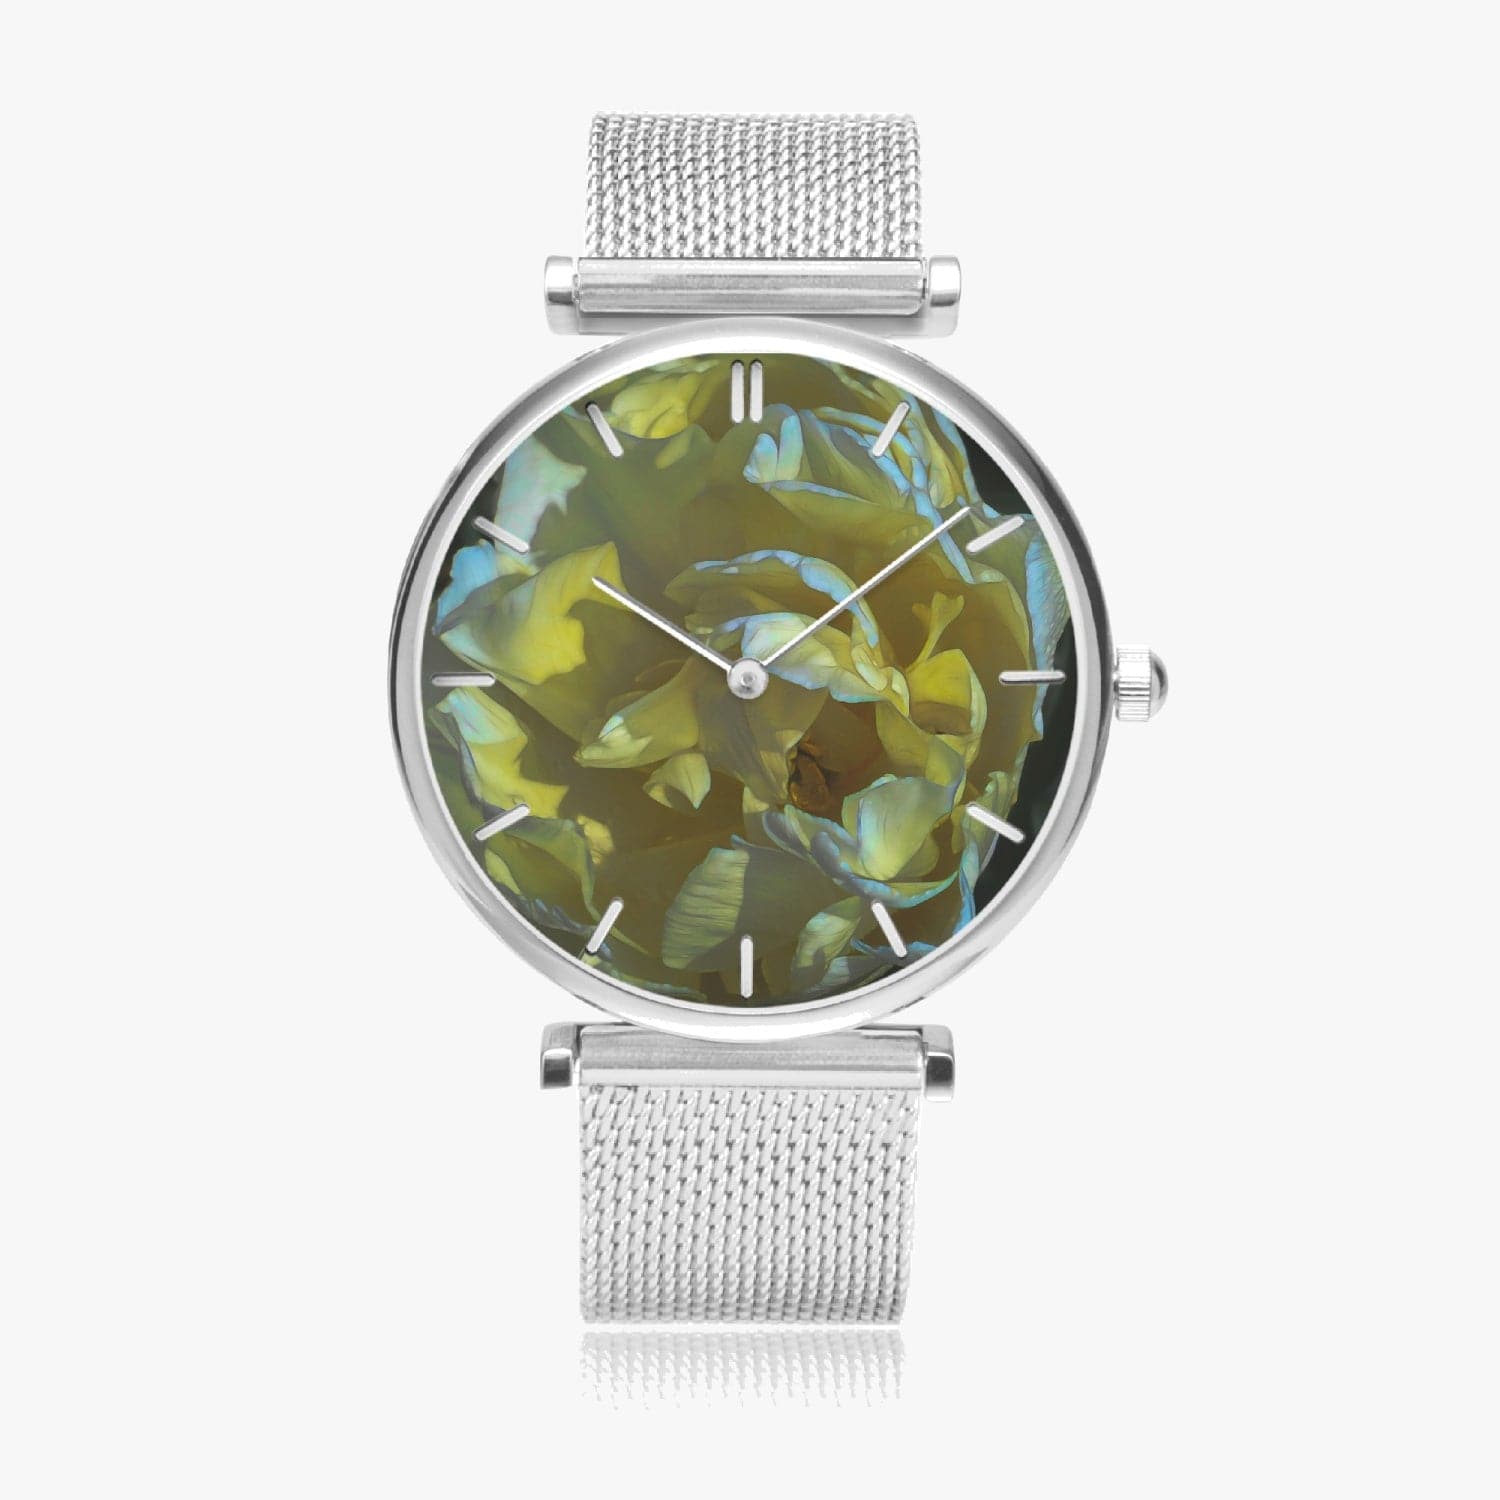 Bridal tulip New Stylish Ultra-Thin Quartz Watch (With Indicators), by Sensus Studio